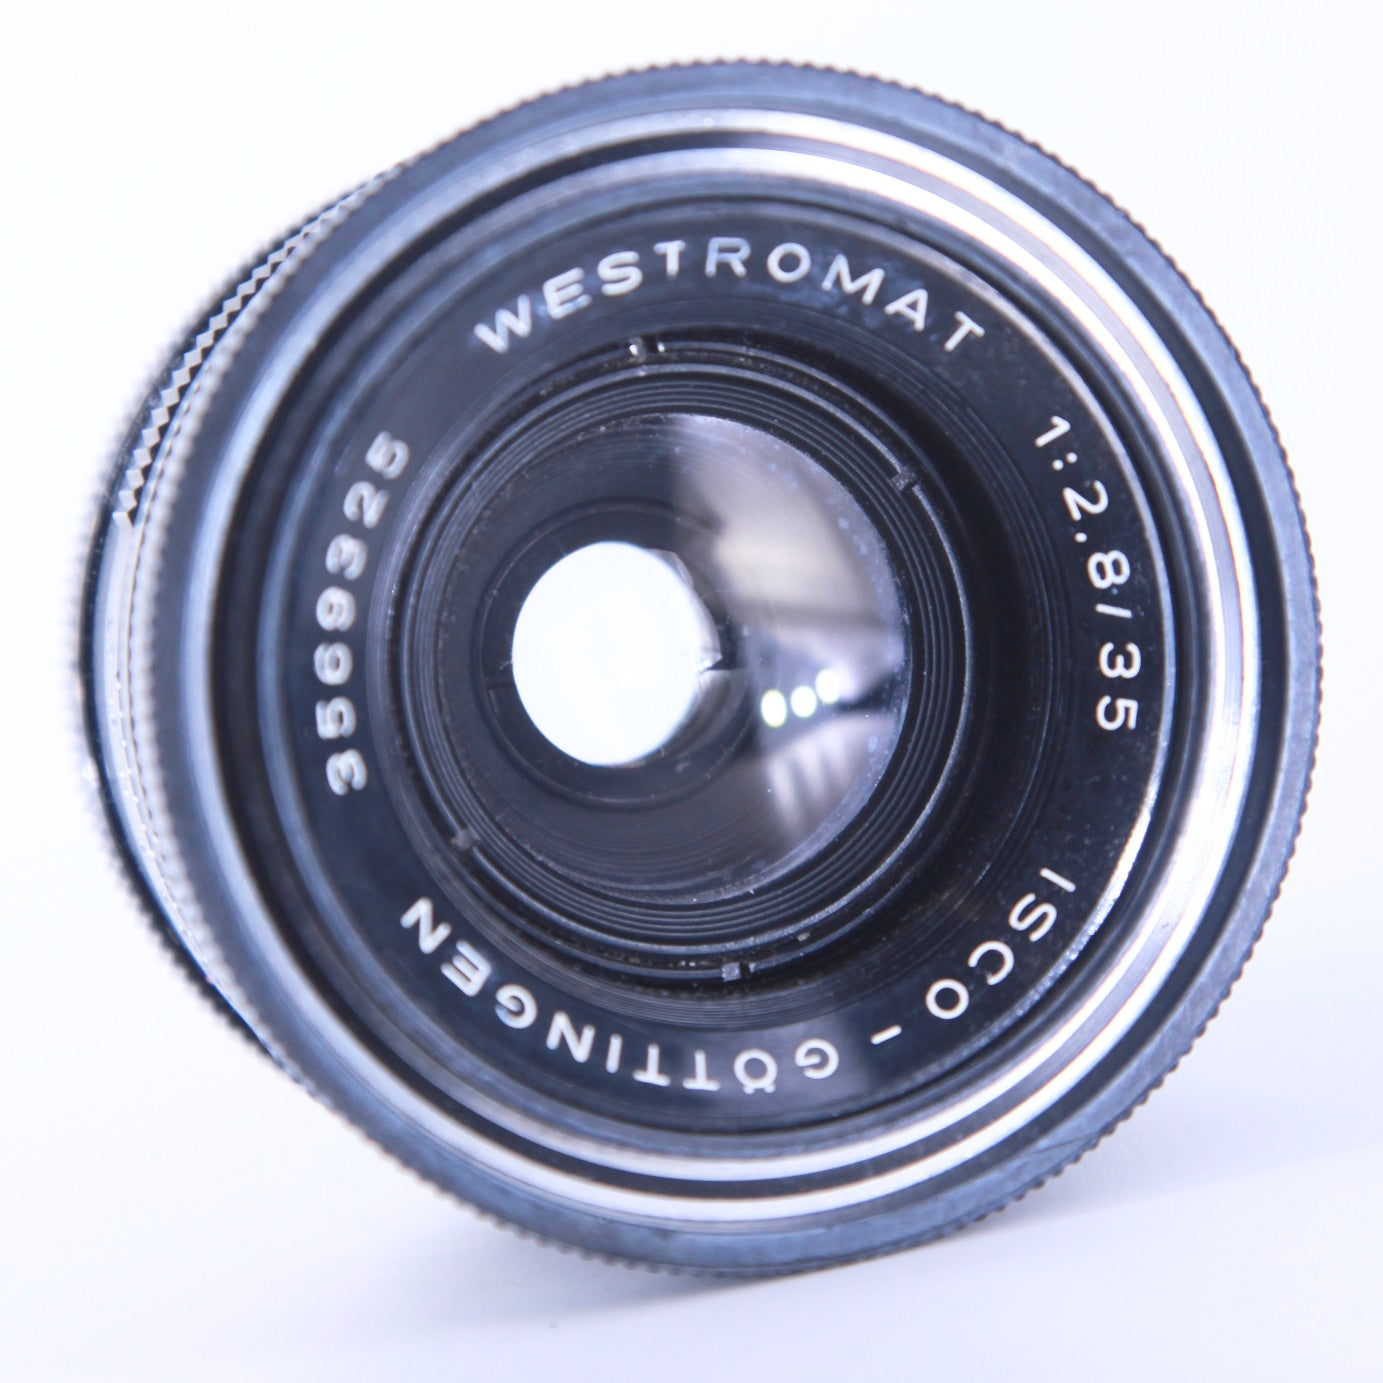 Isco-Gottingen Westromat 35mm f2.8